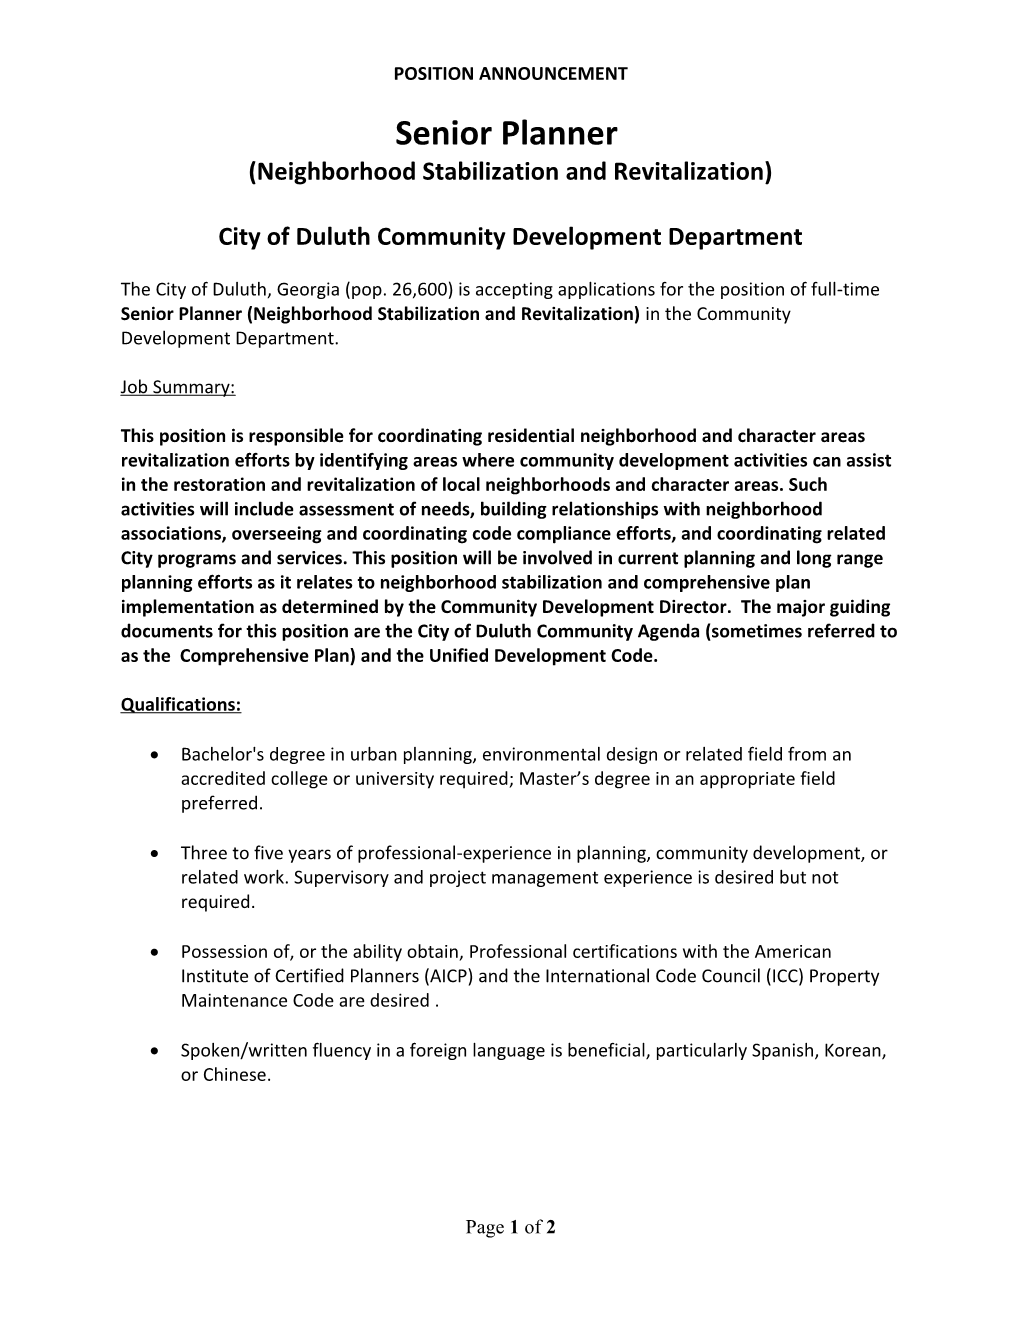 Neighborhood Stabilization and Revitalization